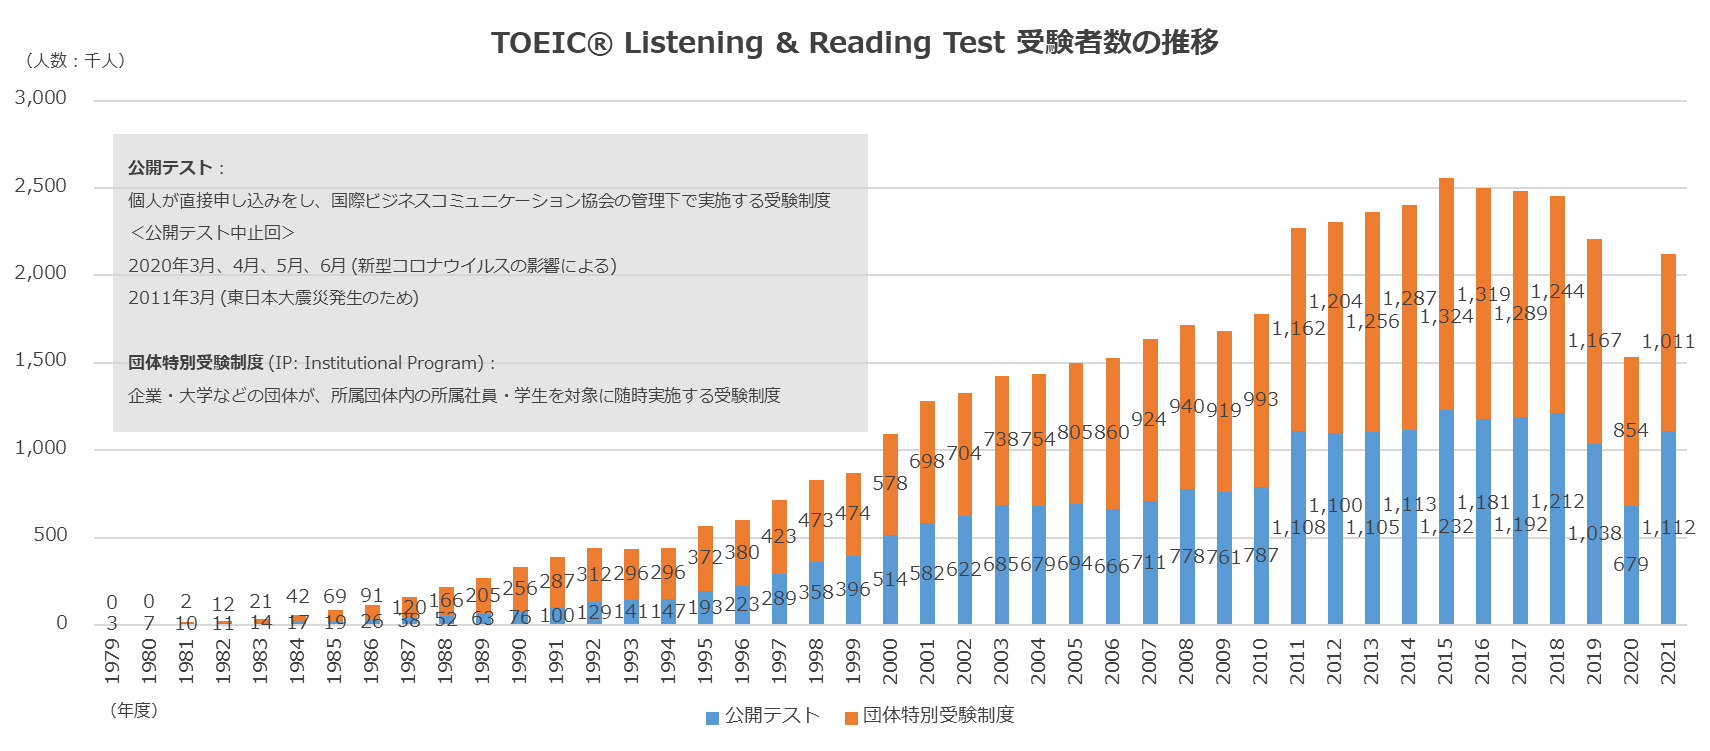 TOEIC Listening & Reading Test 受験者数の推移